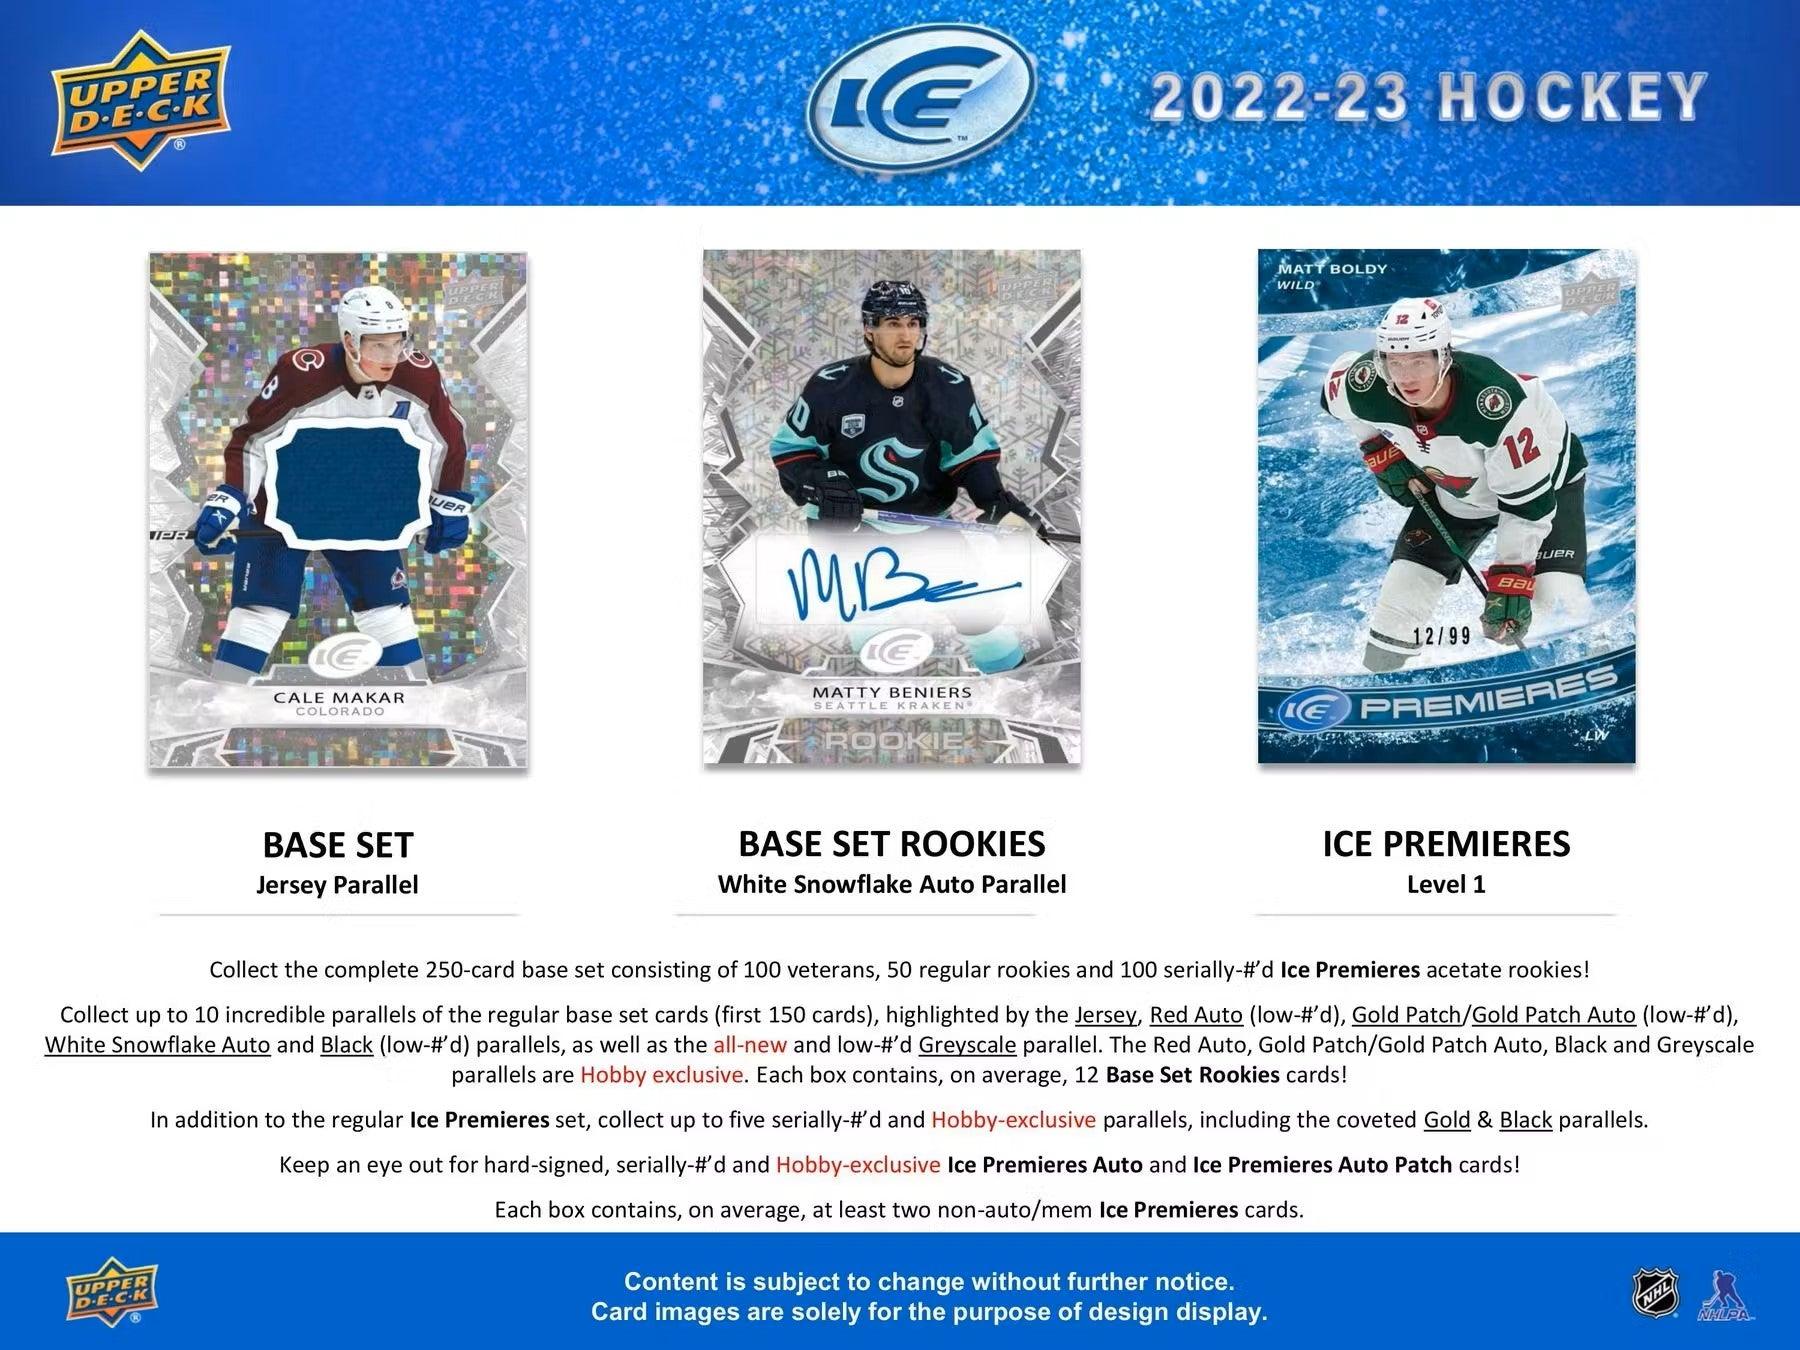 Hockey - 2022/23 - Upper Deck ICE - Hobby Pack (6 Cards) - Hobby Champion Inc